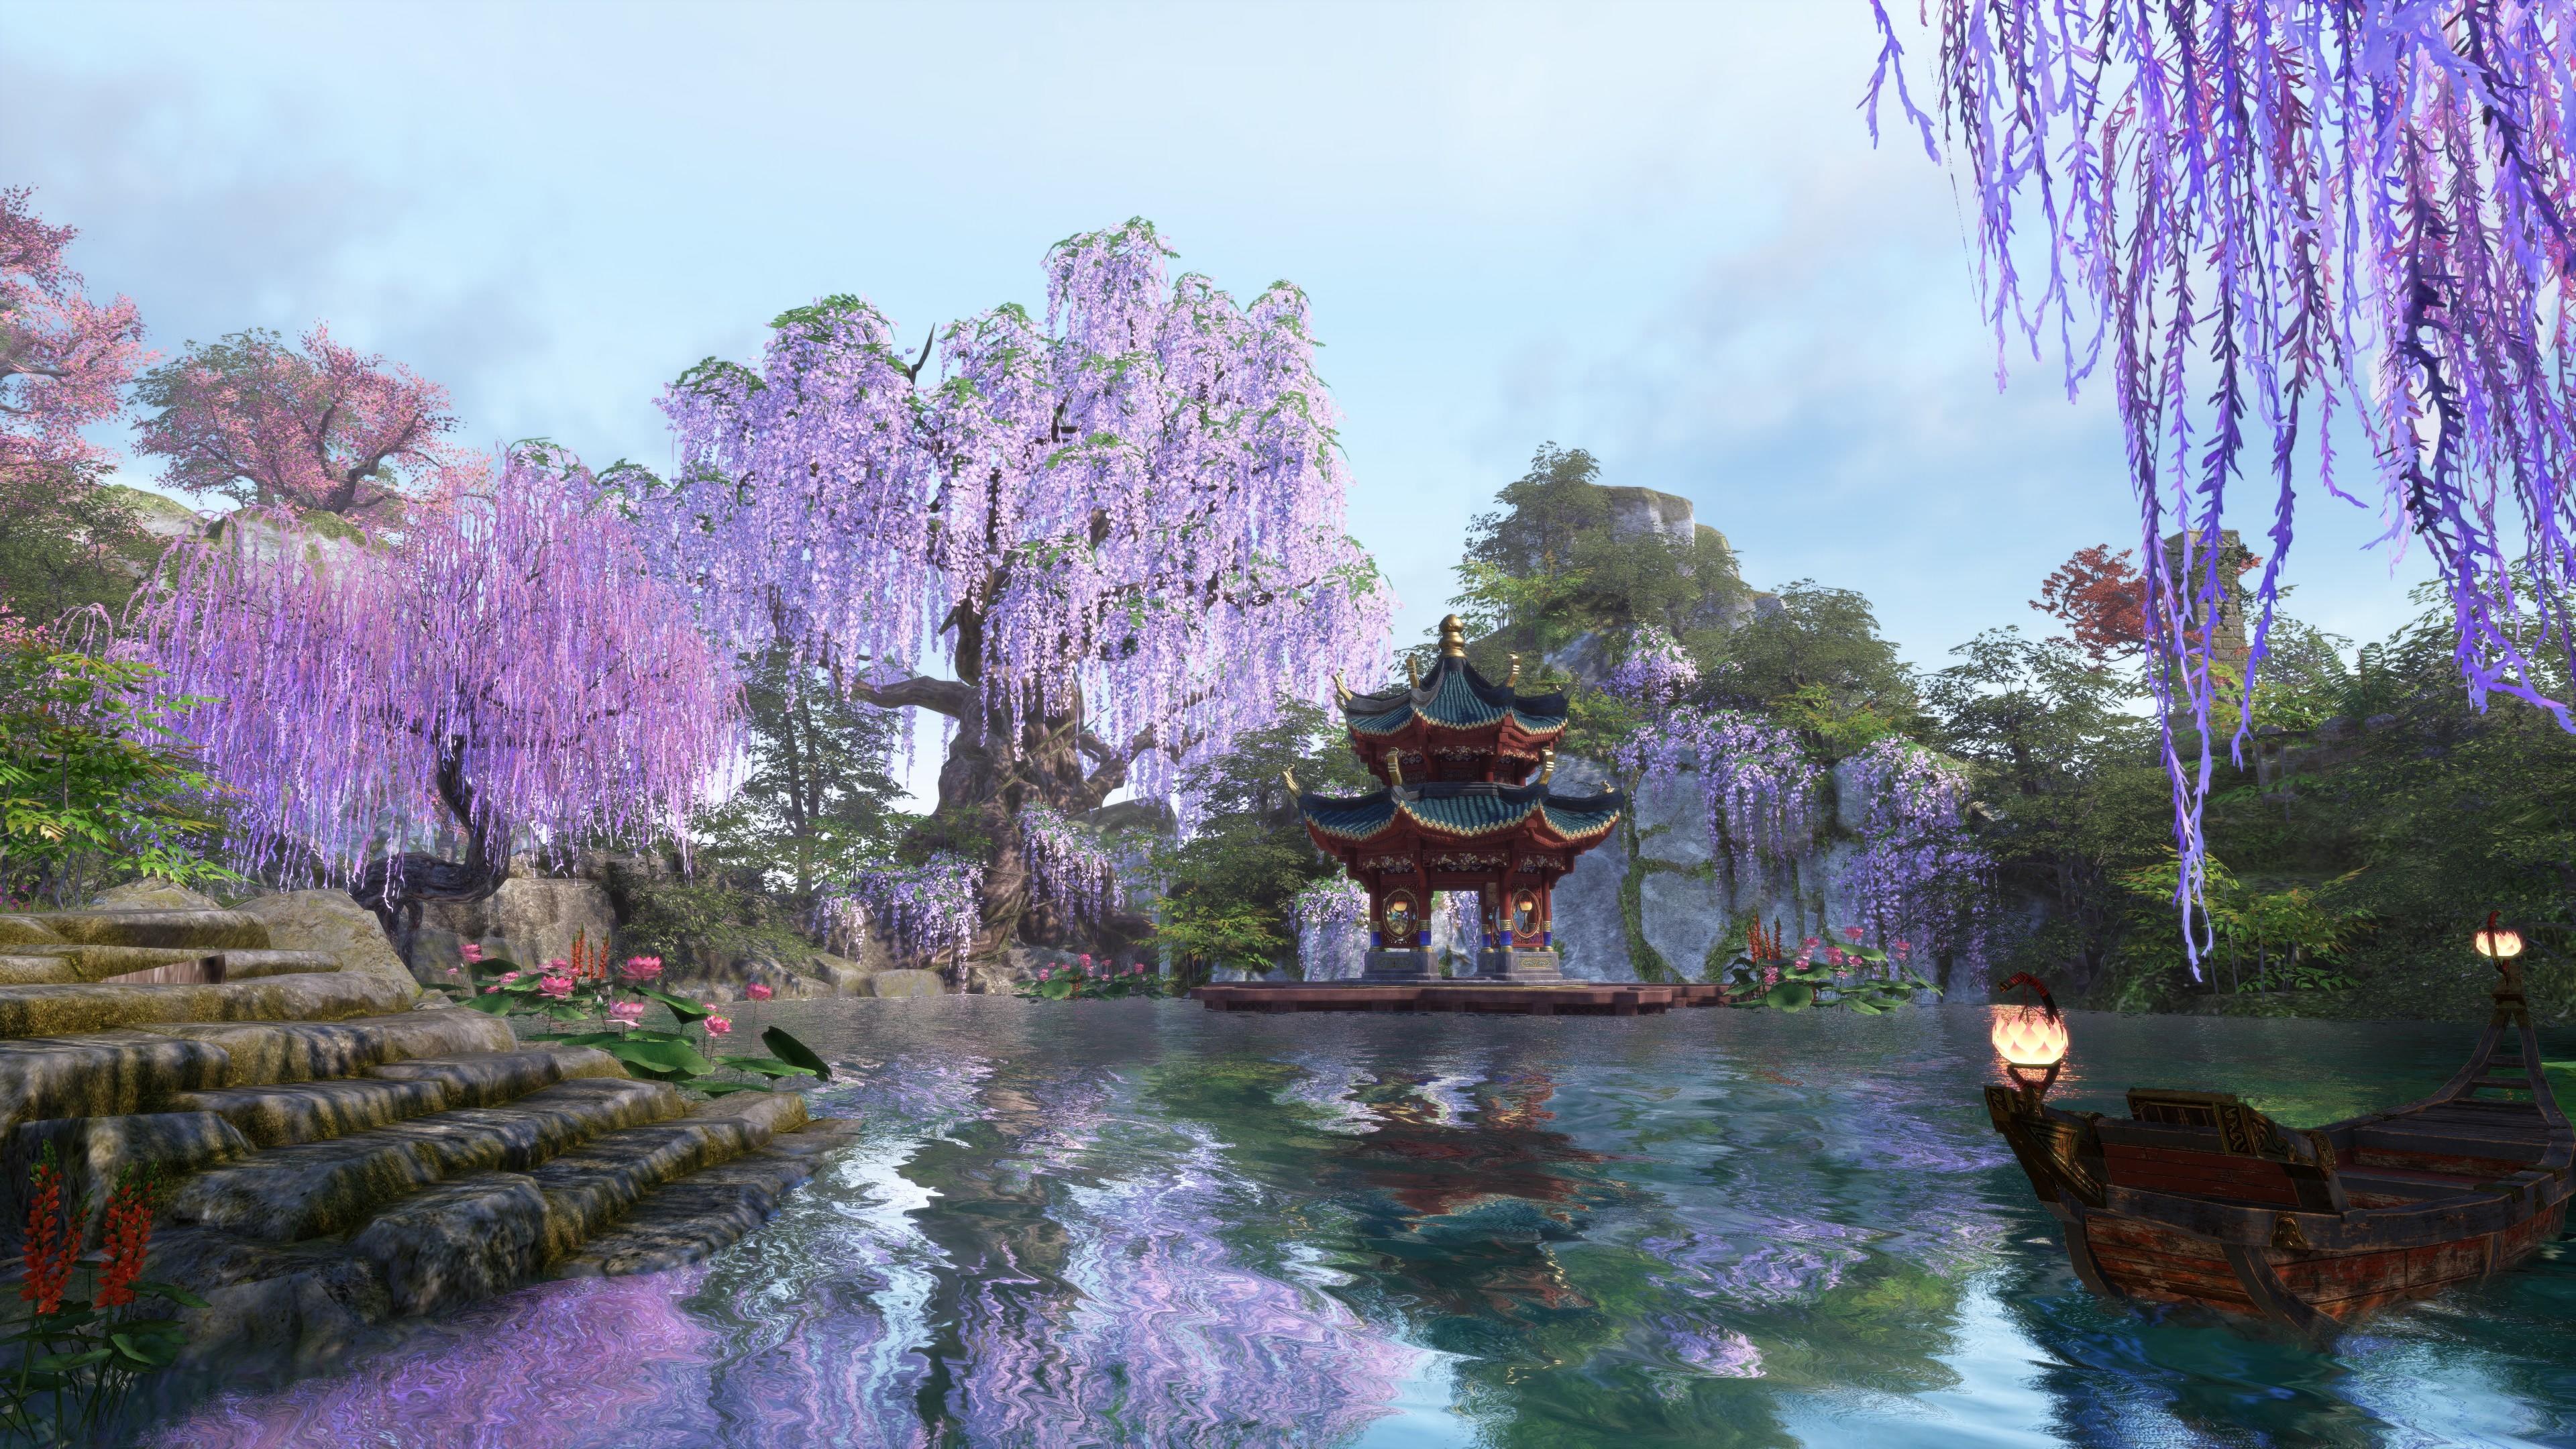 Video Game Swords of Legends Online HD Wallpaper | Background Image